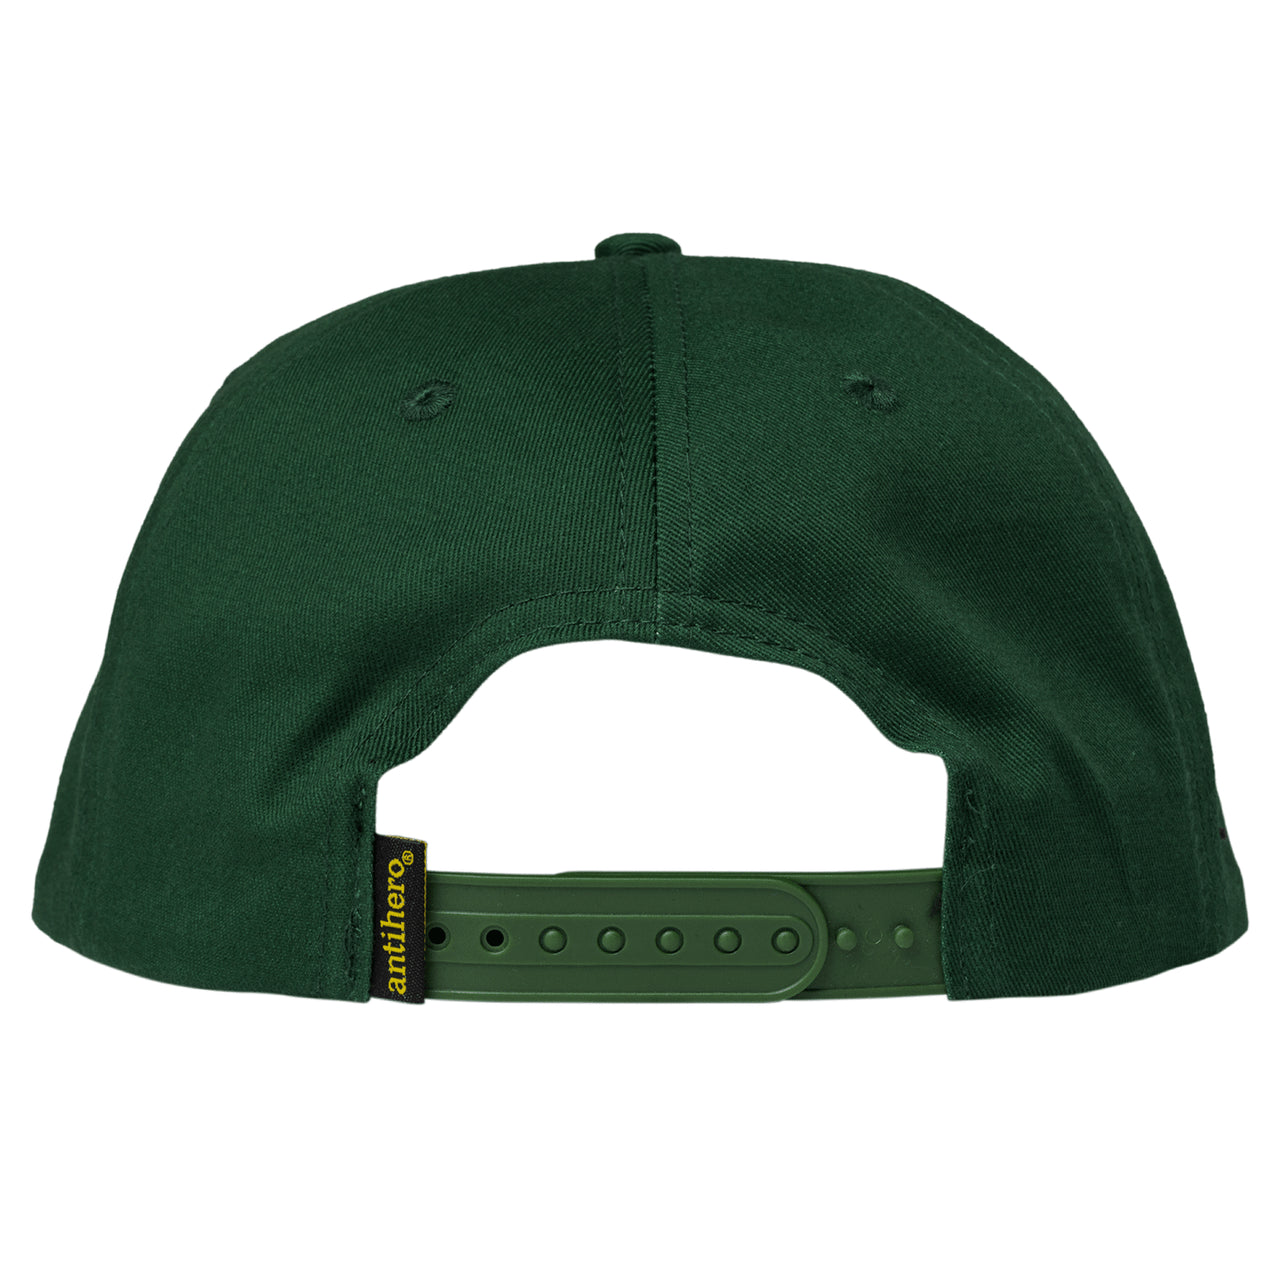 Antihero Lil Pigeon Snapback Forest Hat: Green/Yellow